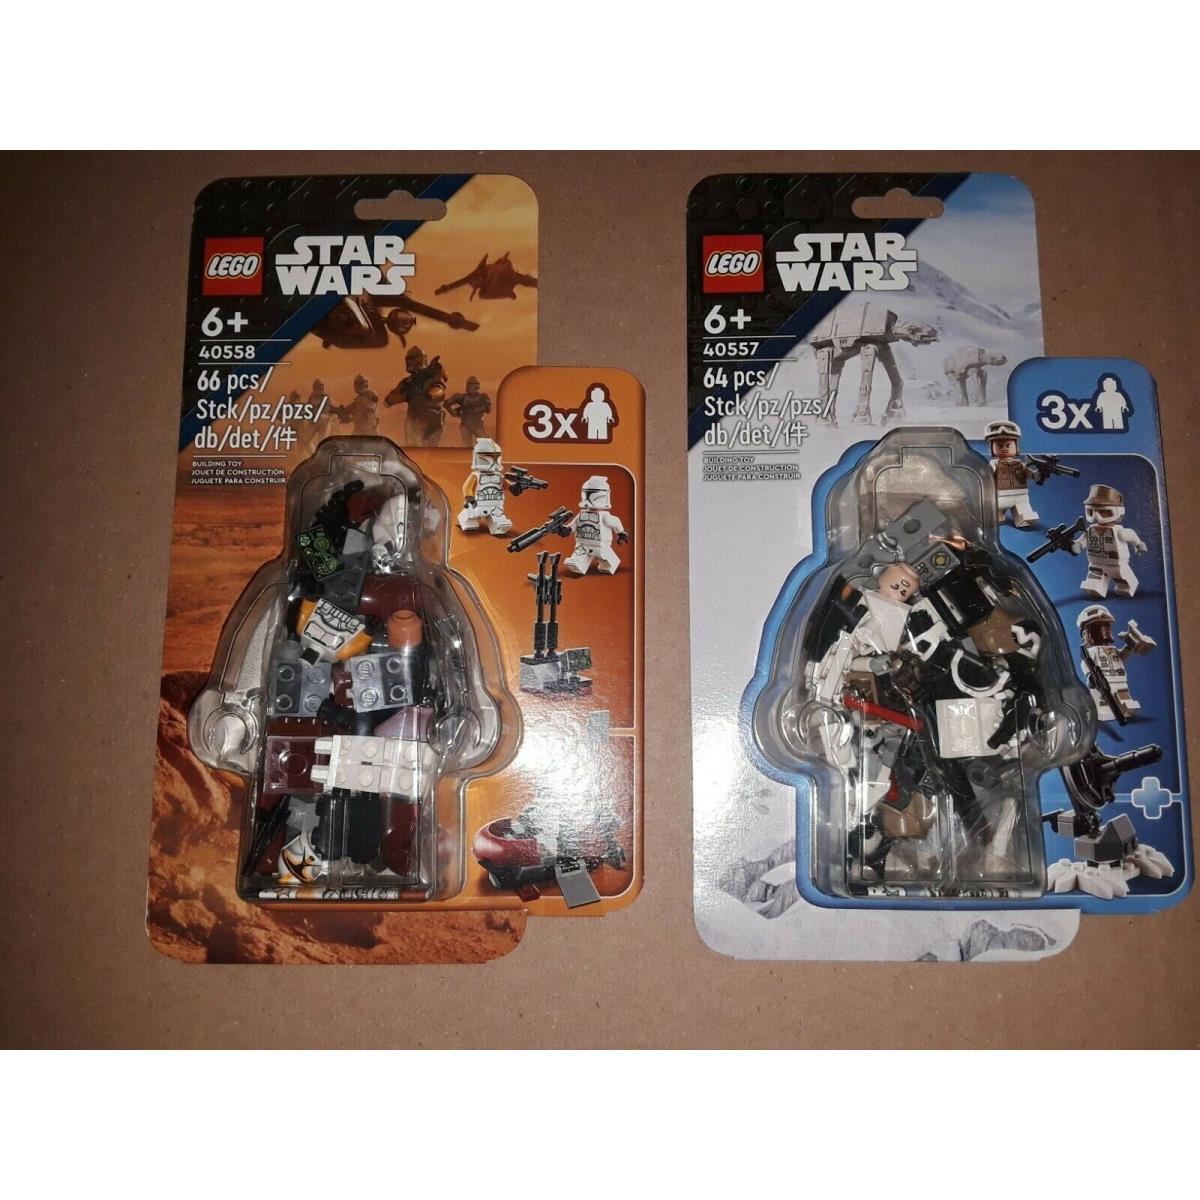 Lego Star Wars 40557 Defense of Hoth 40558 Trooper Commander Station Ffs